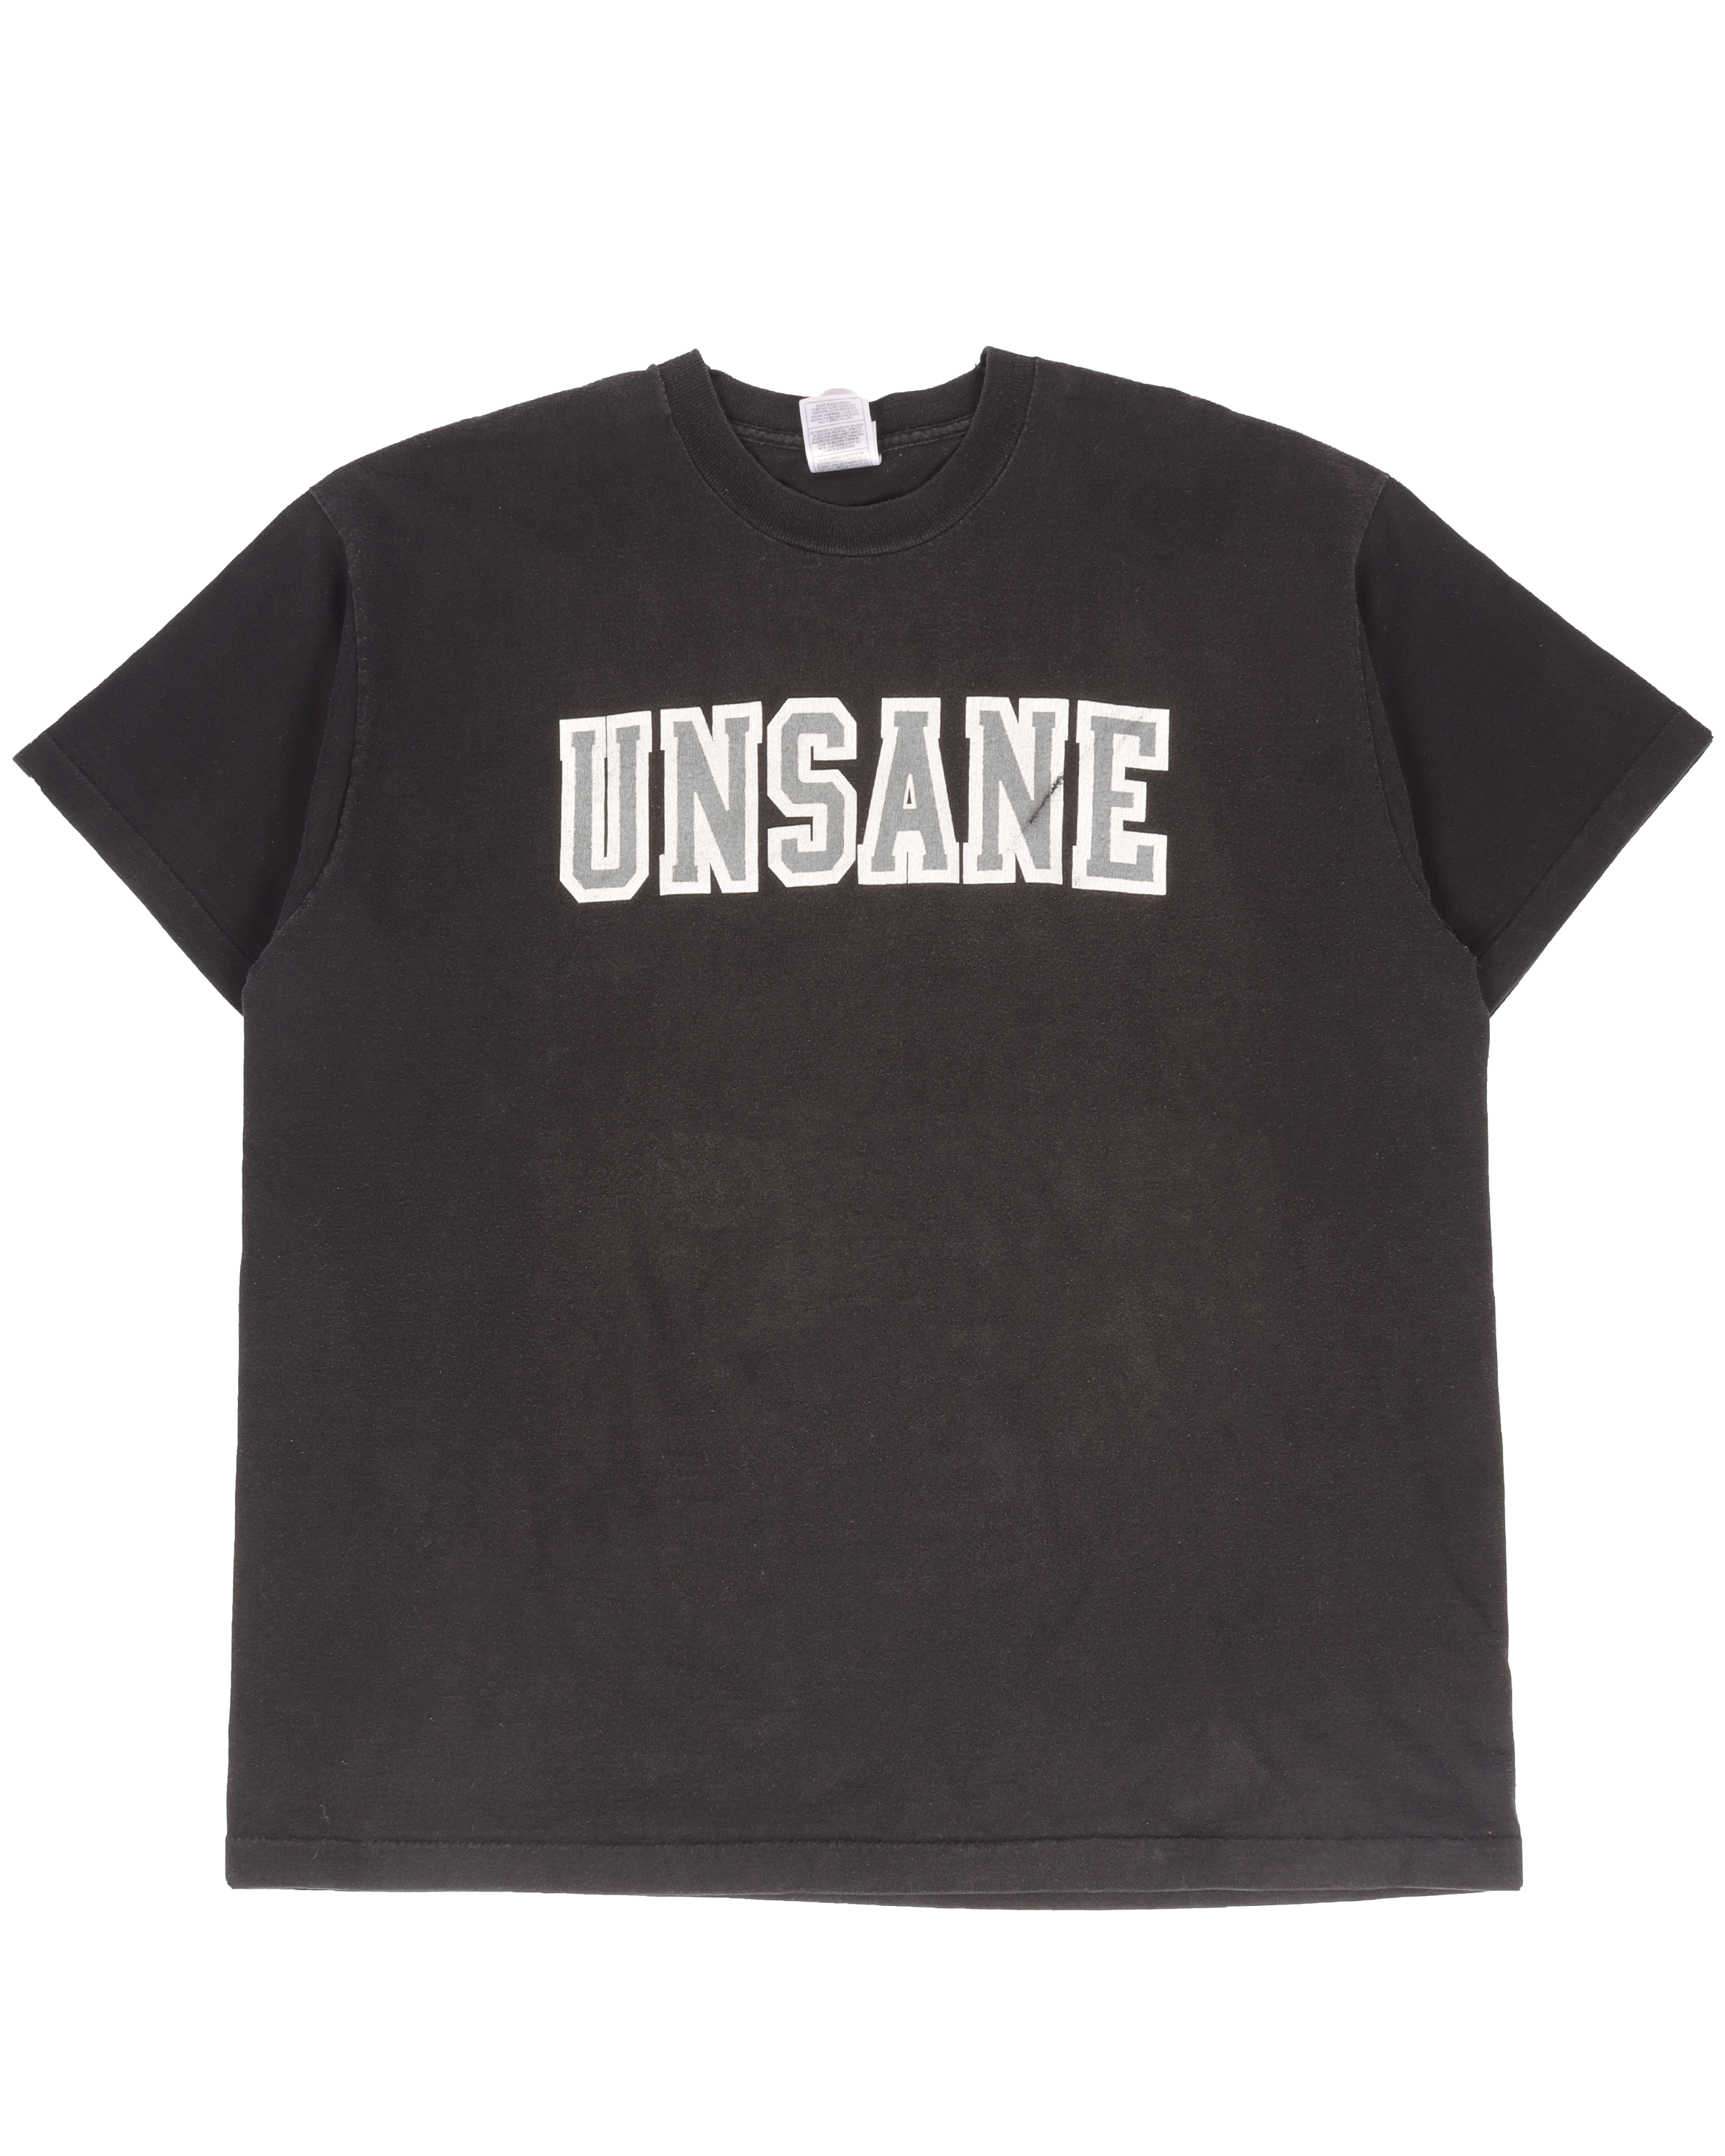 Amphetamine Reptile Records "Unsane" T-Shirt